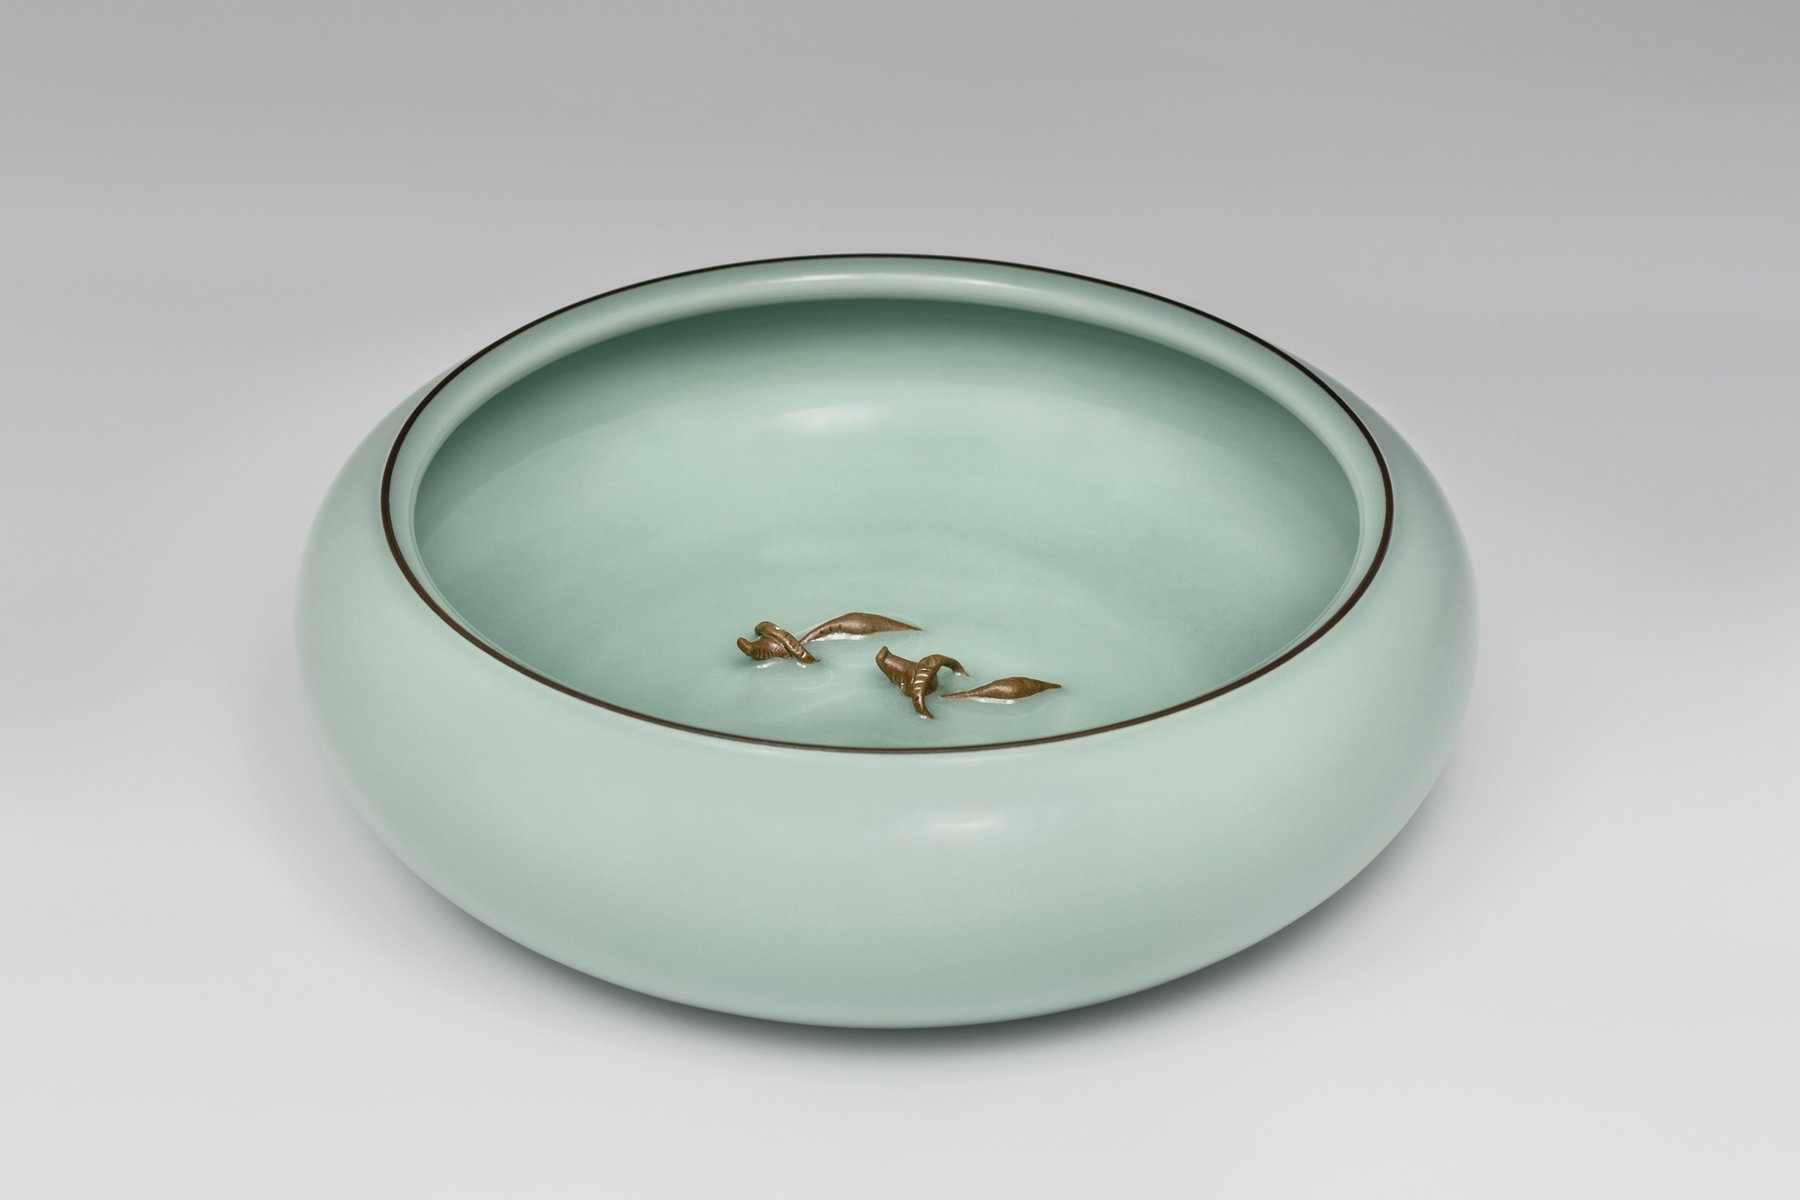 Delicate mint green crackle glazed porcelain bowl, grey background, Seladon im Augenmaerk in white font above.